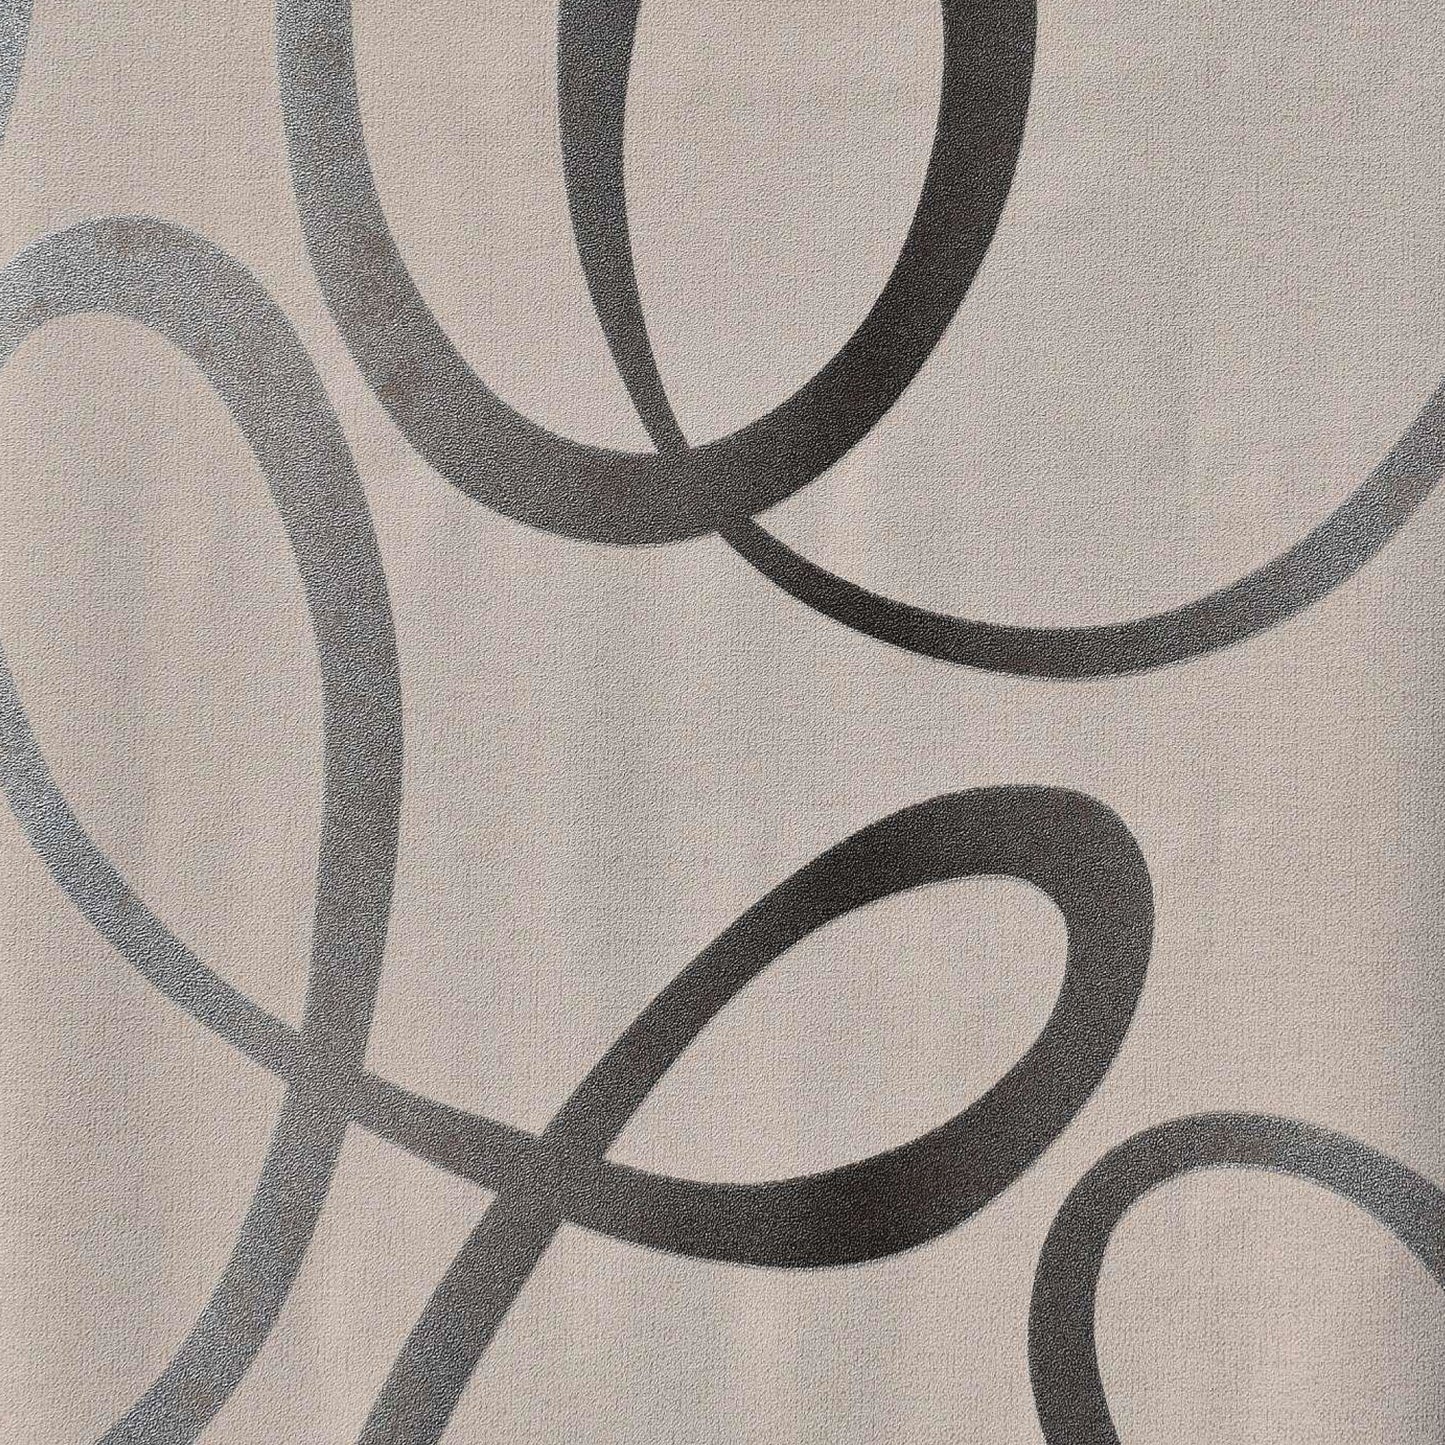 Mesmerizing European Swirls Wallpaper